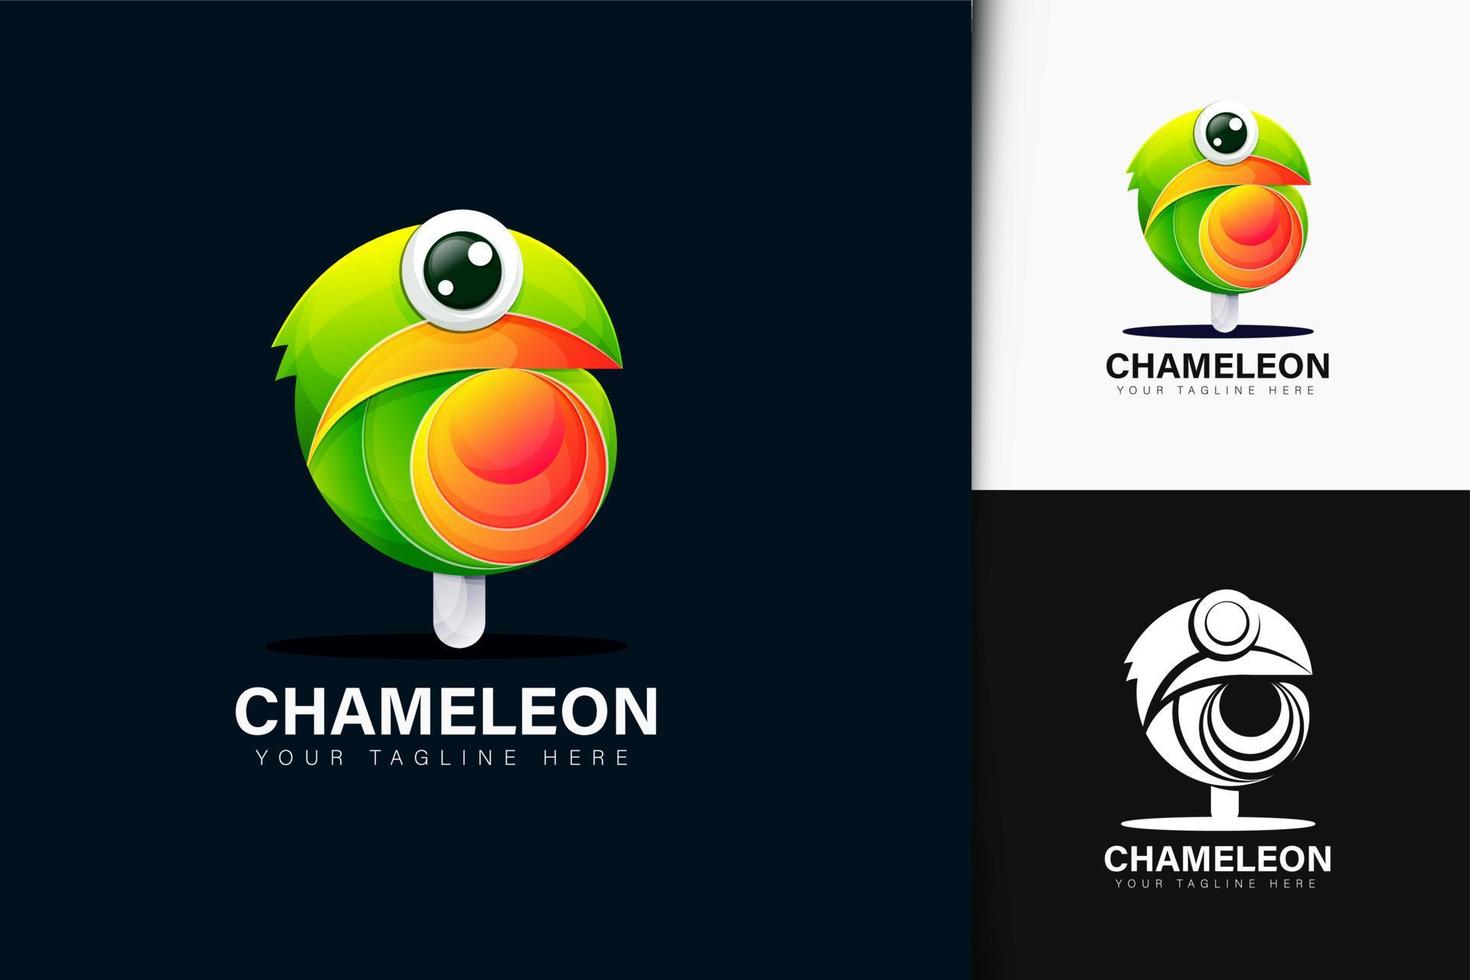 Cameleon and lollipop logo design vector